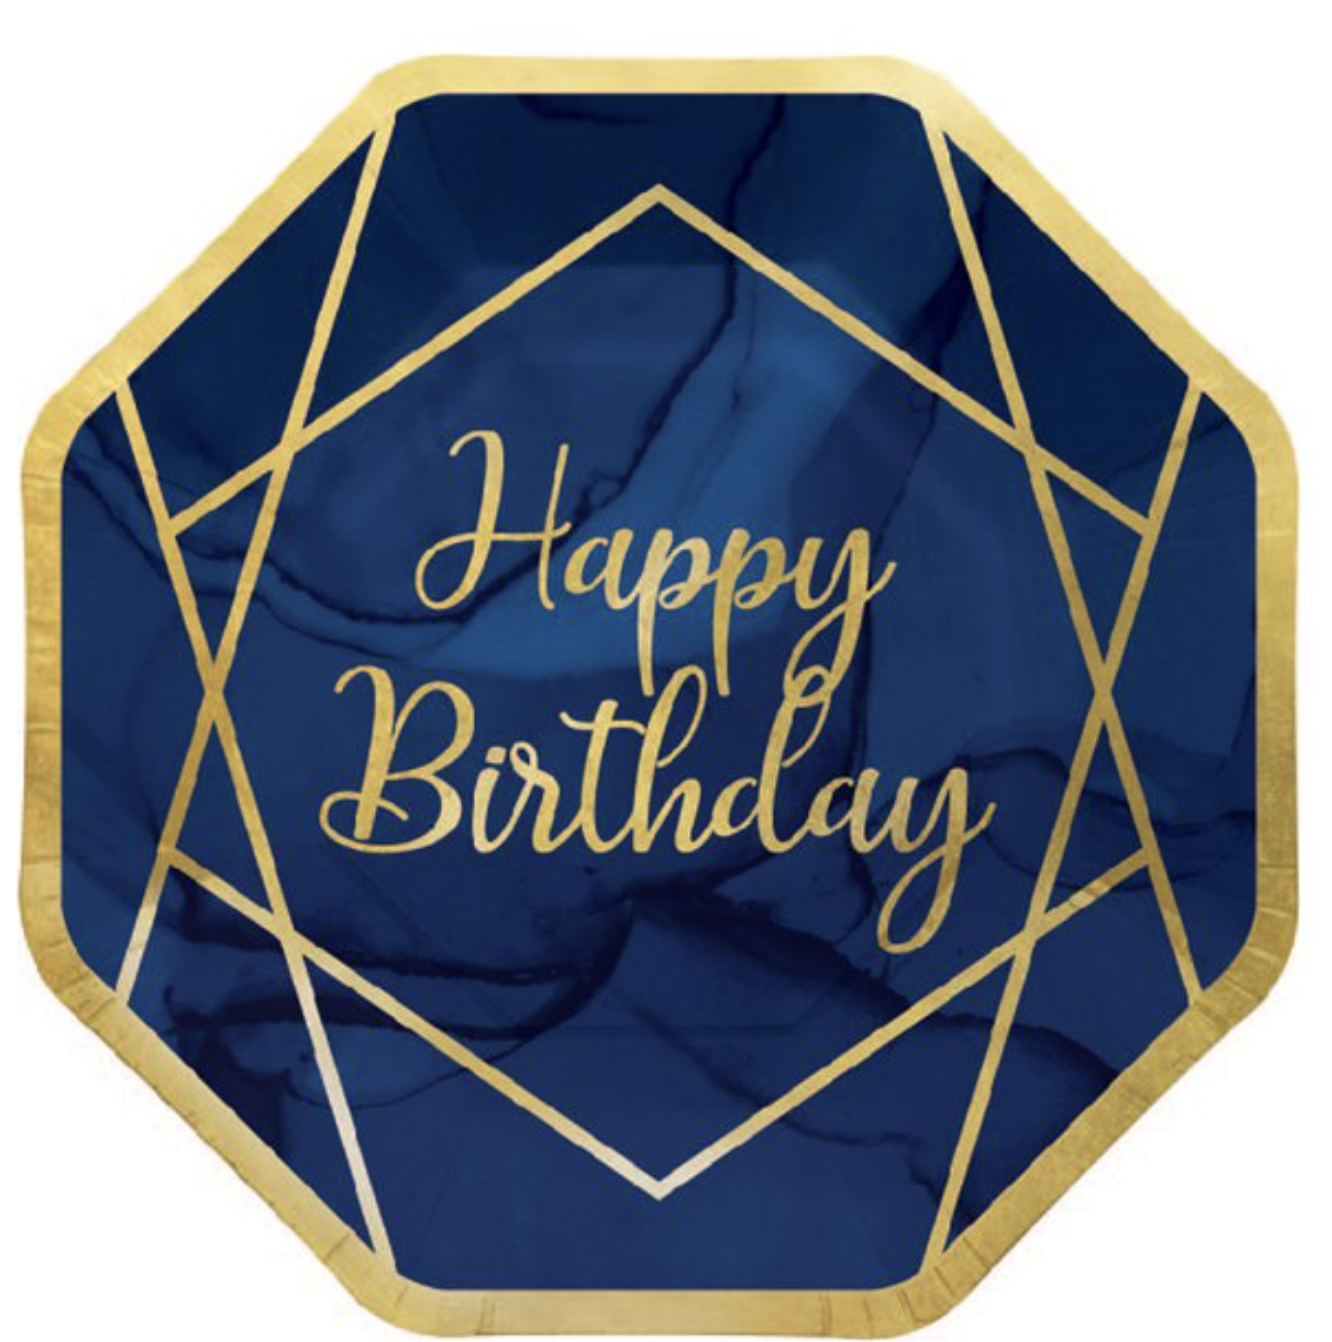 Happy birthday borden blauw - goud | J-style-deco.nl | Snel geleverd - J-style-deco.nl Online & Speelgoedwinkel